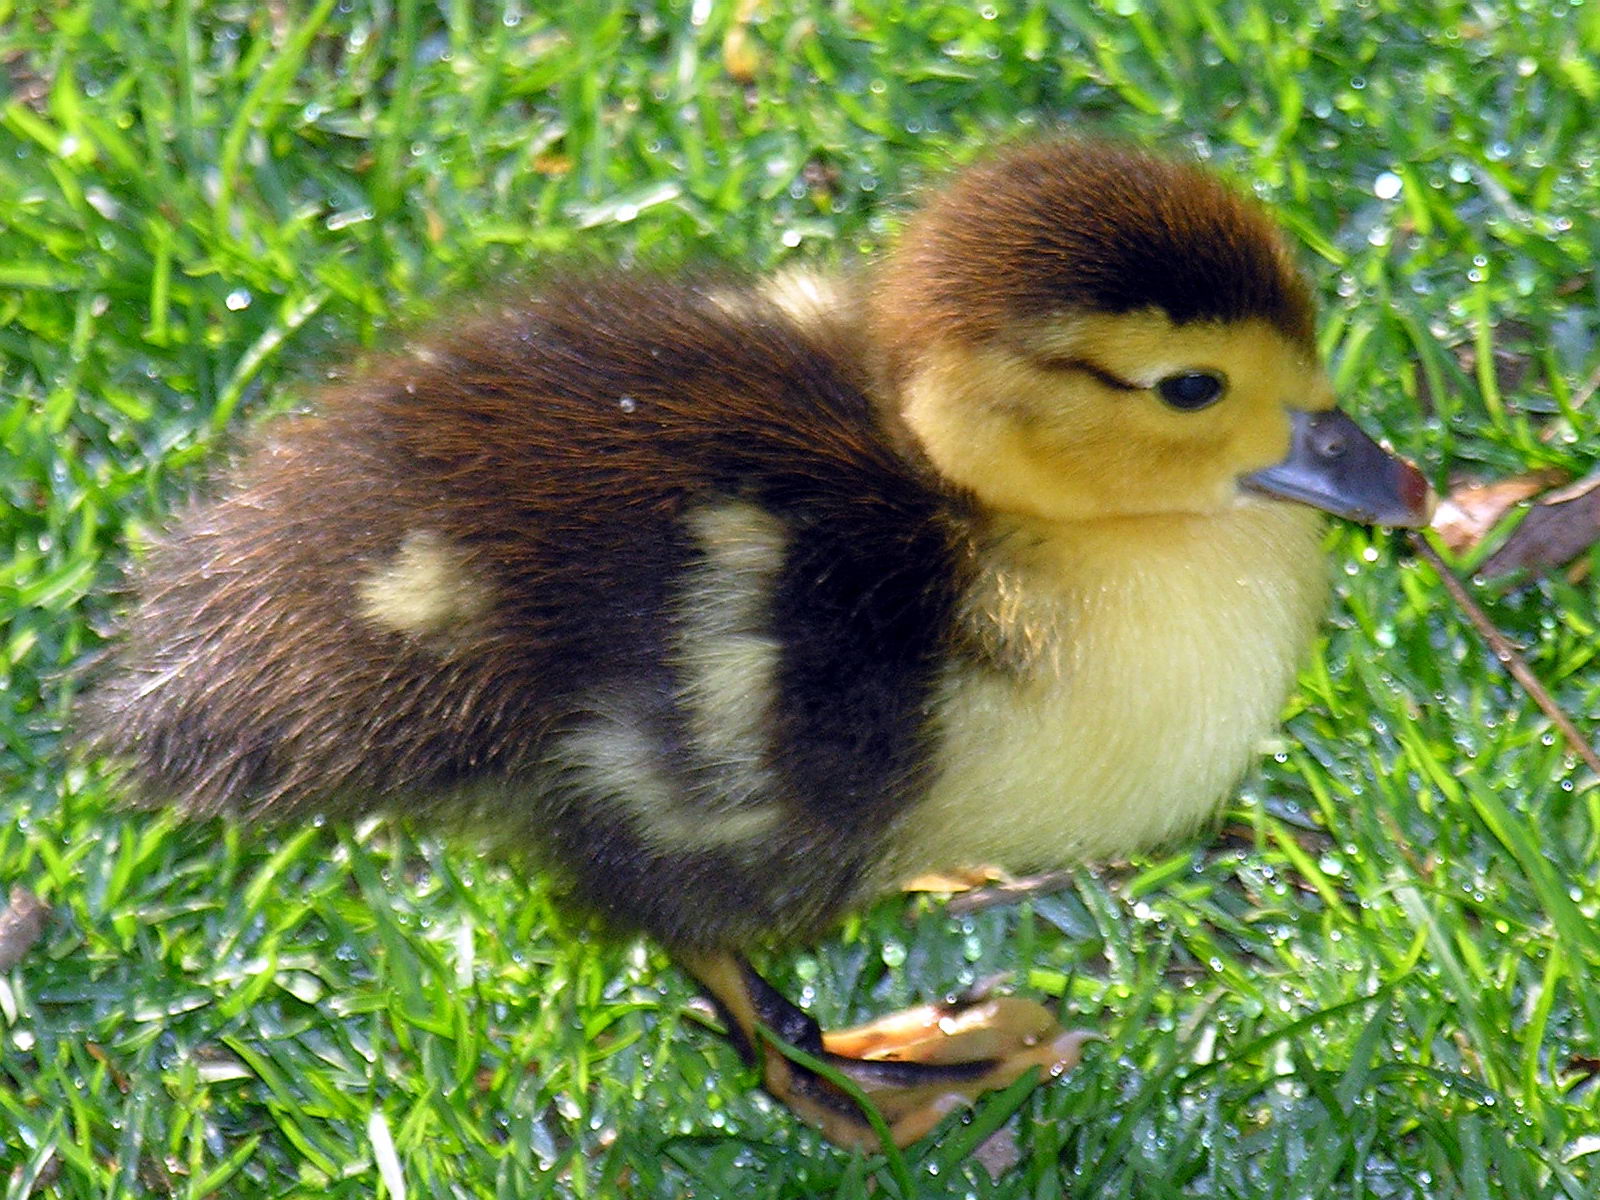 File:Parrulo -Muscovy duckling.jpg - Wikimedia Commons